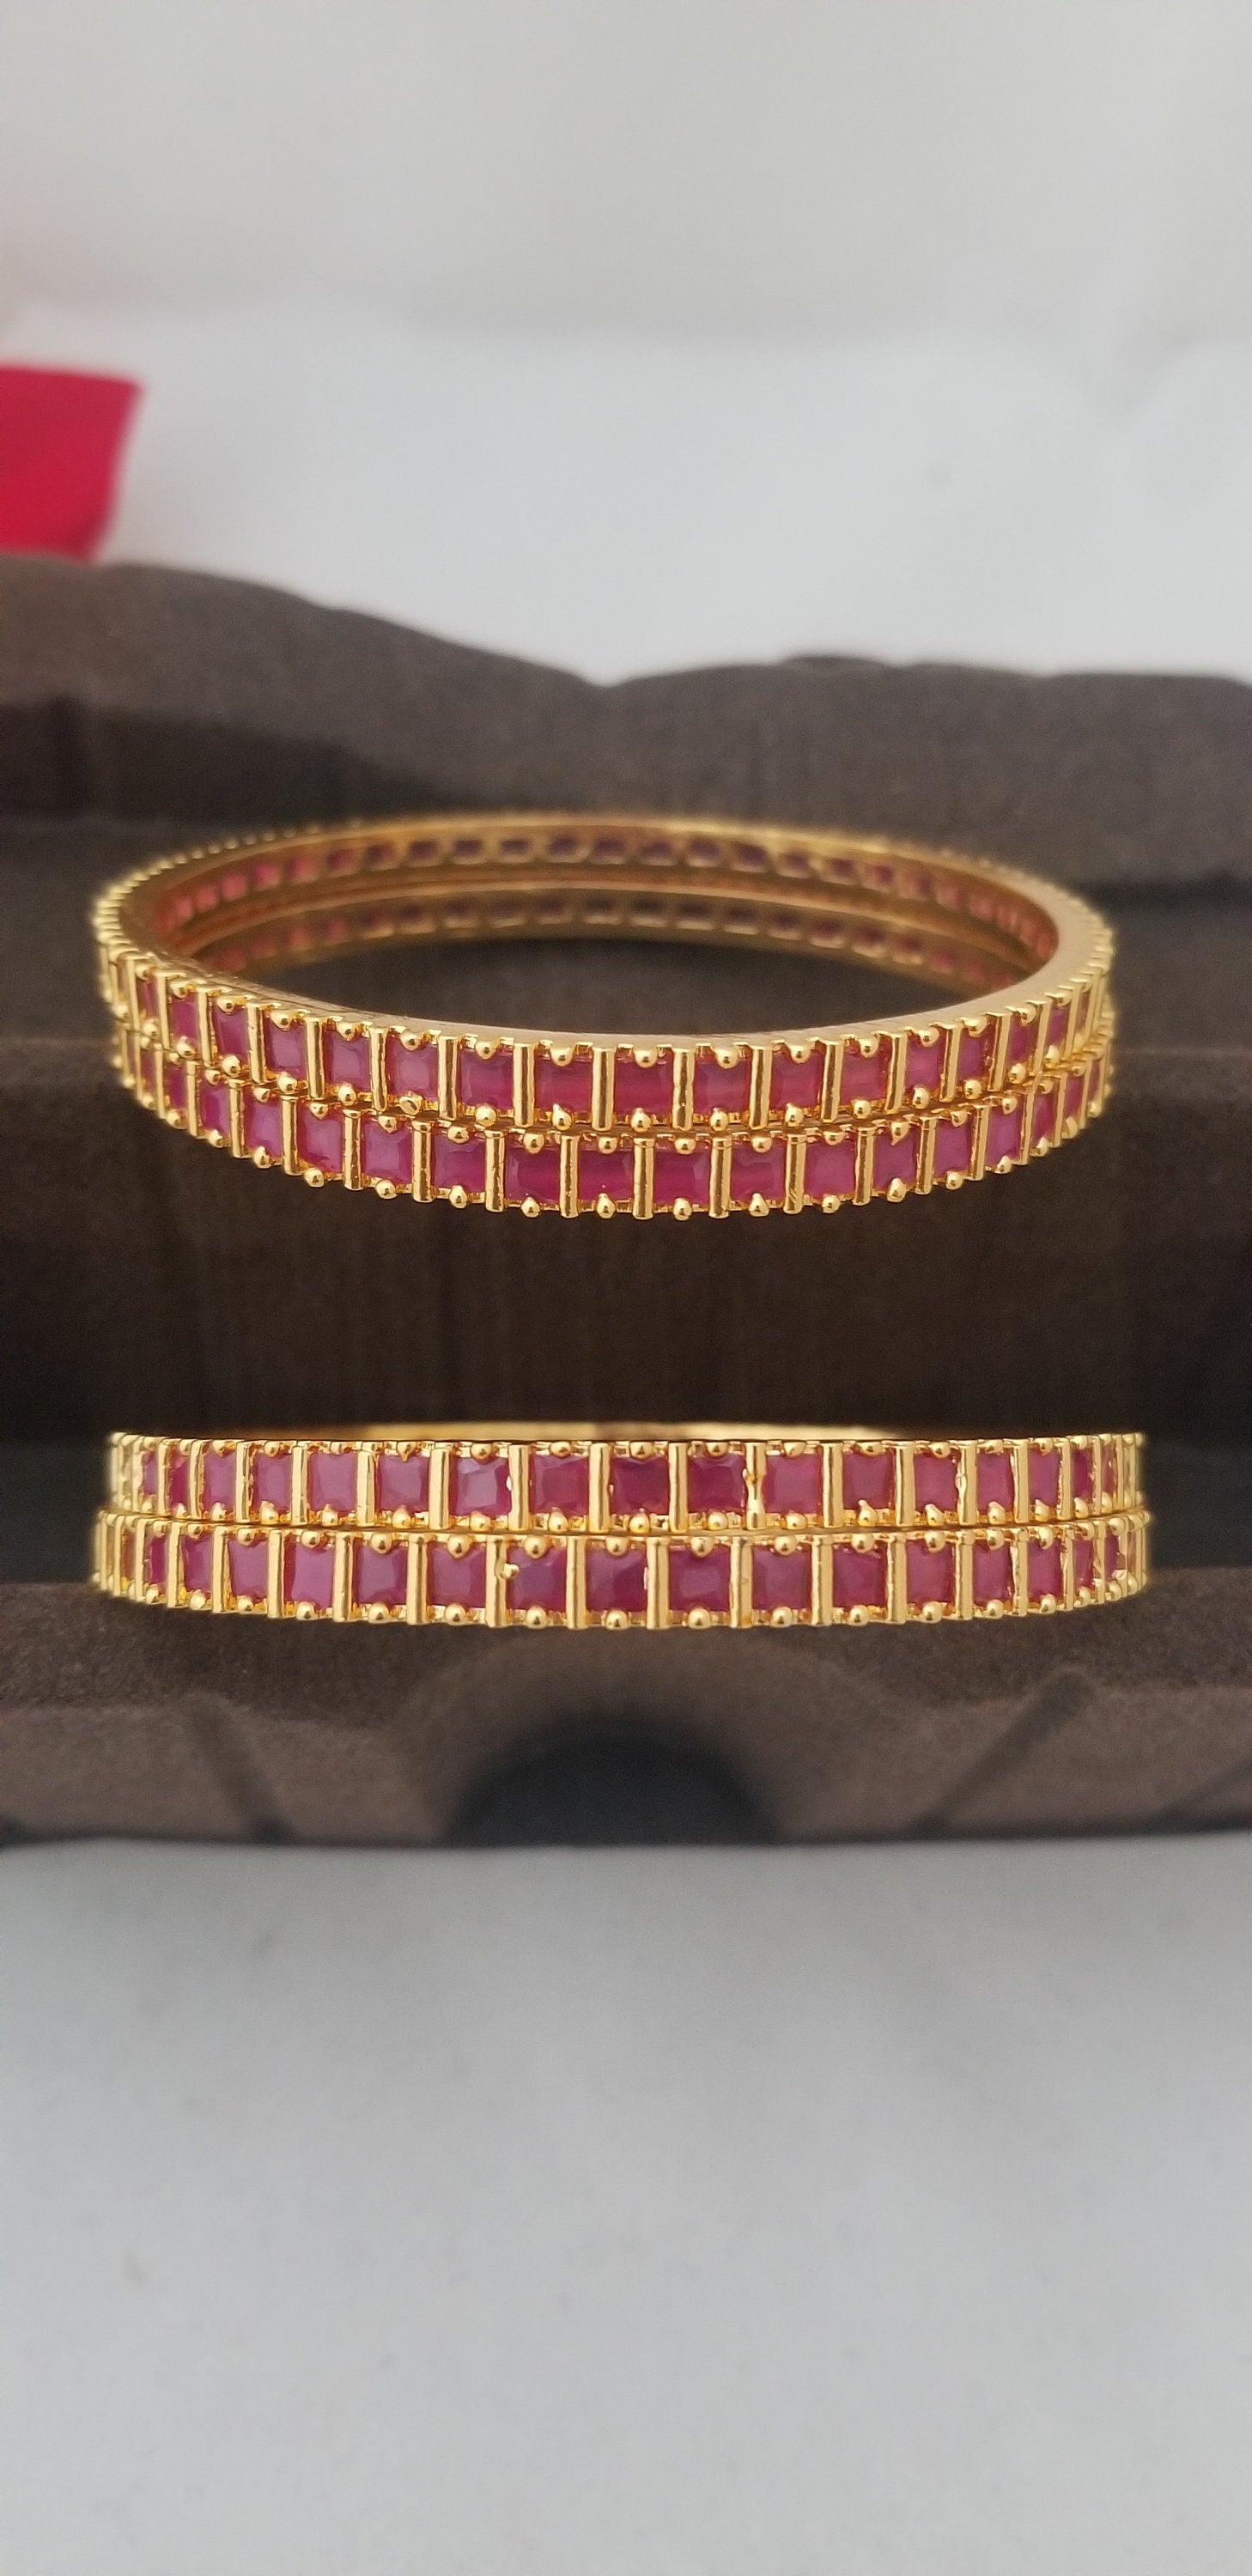 Premium Quality Gold finish AD Pink stone Bangles - Set of 4 bangles - Size 2.6